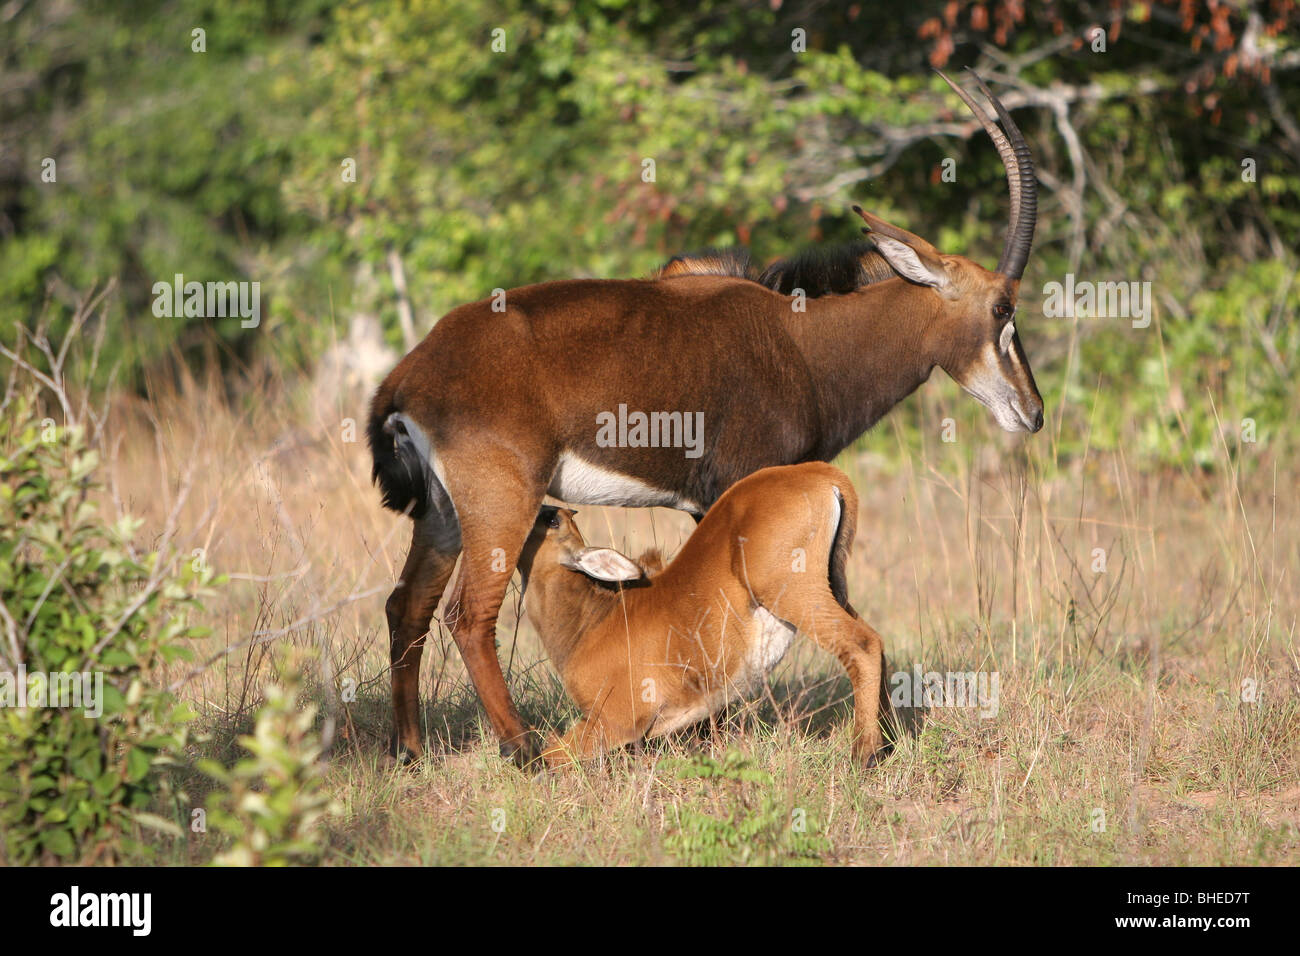 Femme Hippotrague (Hippotragus niger) nourrir ses jeunes dans le site Shimba Hills National Reserve, Kenya Banque D'Images